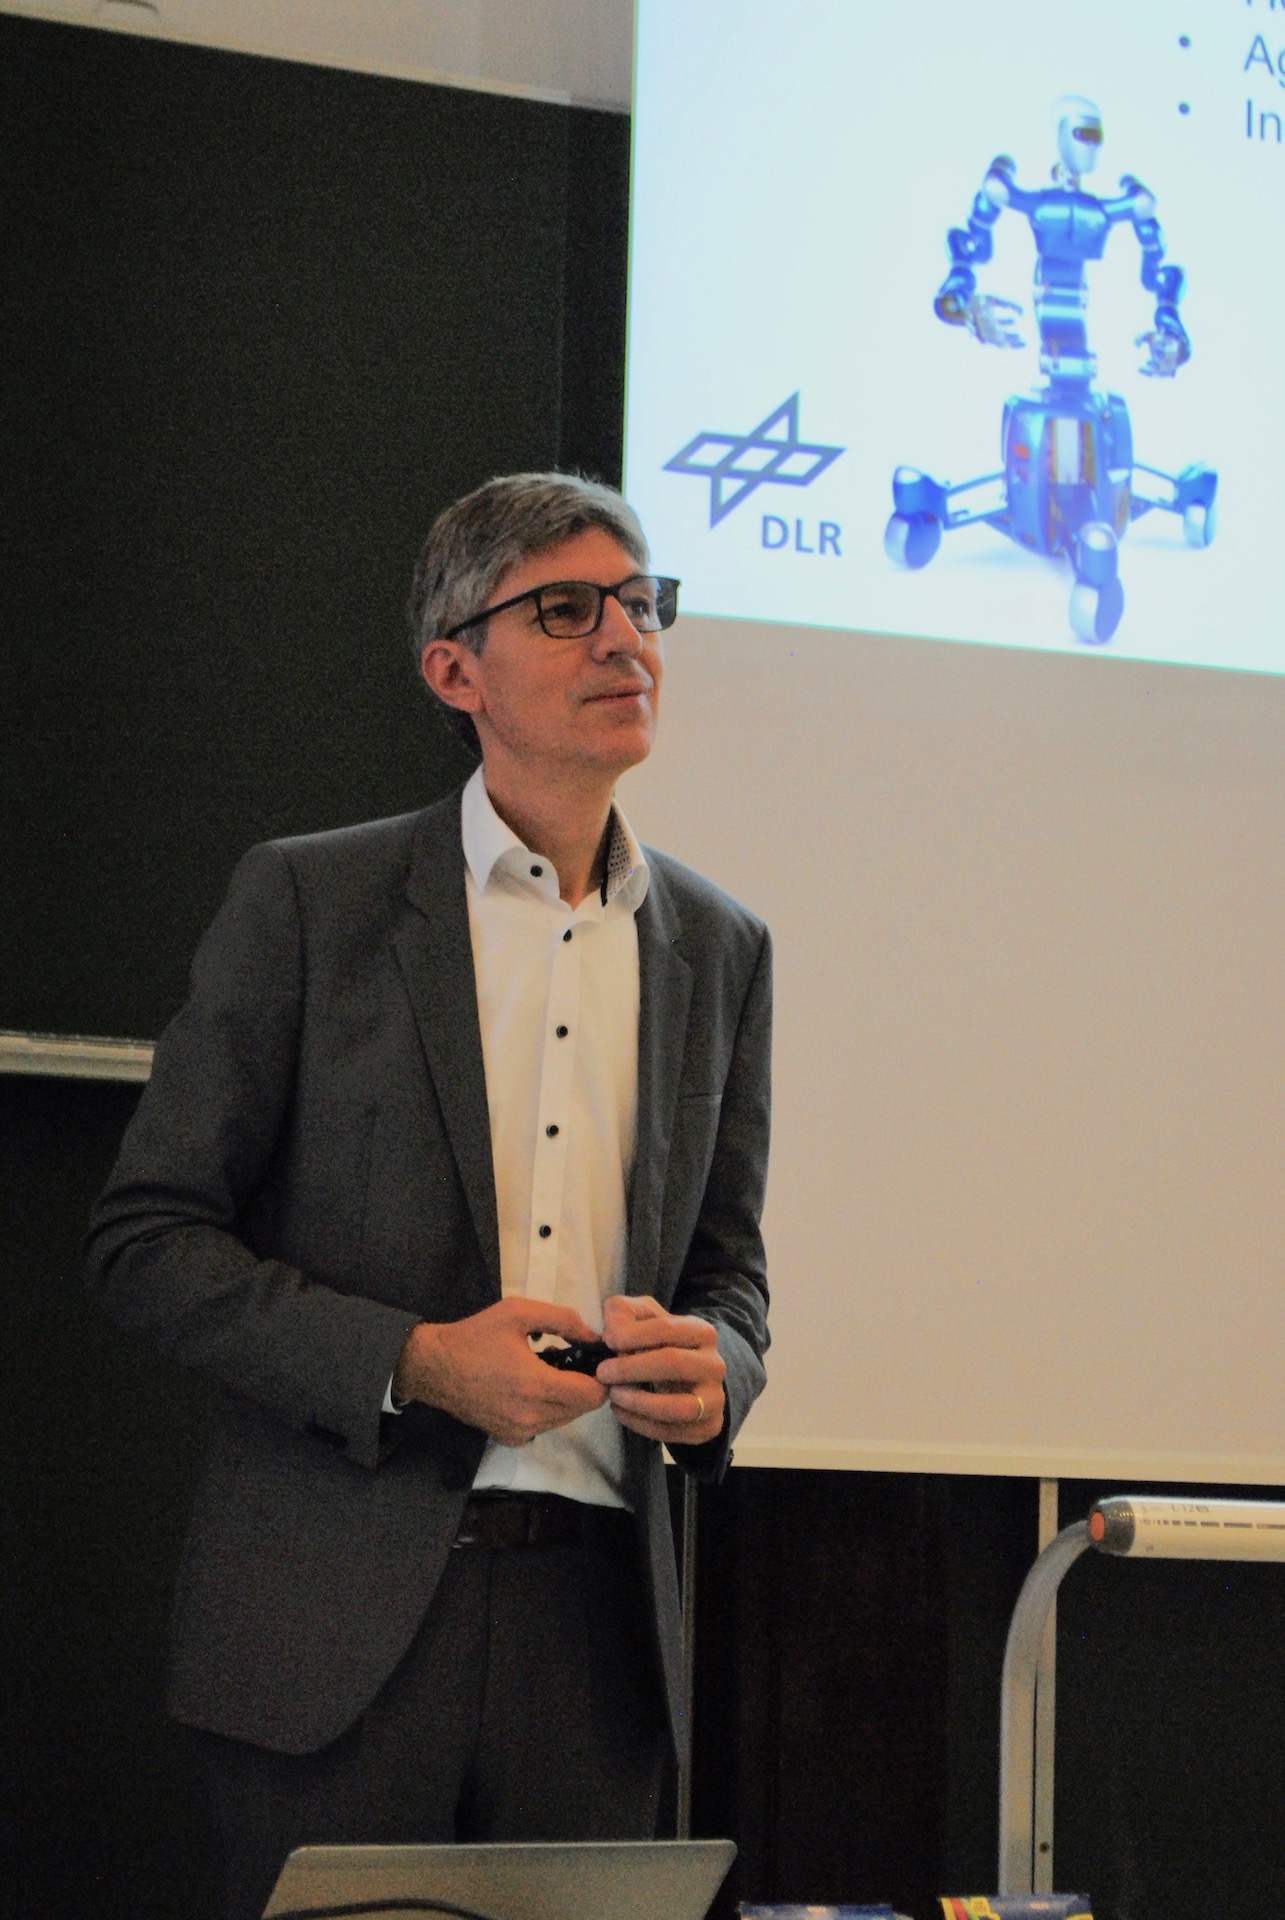 Professor Albu-Schäffer gives a lecture